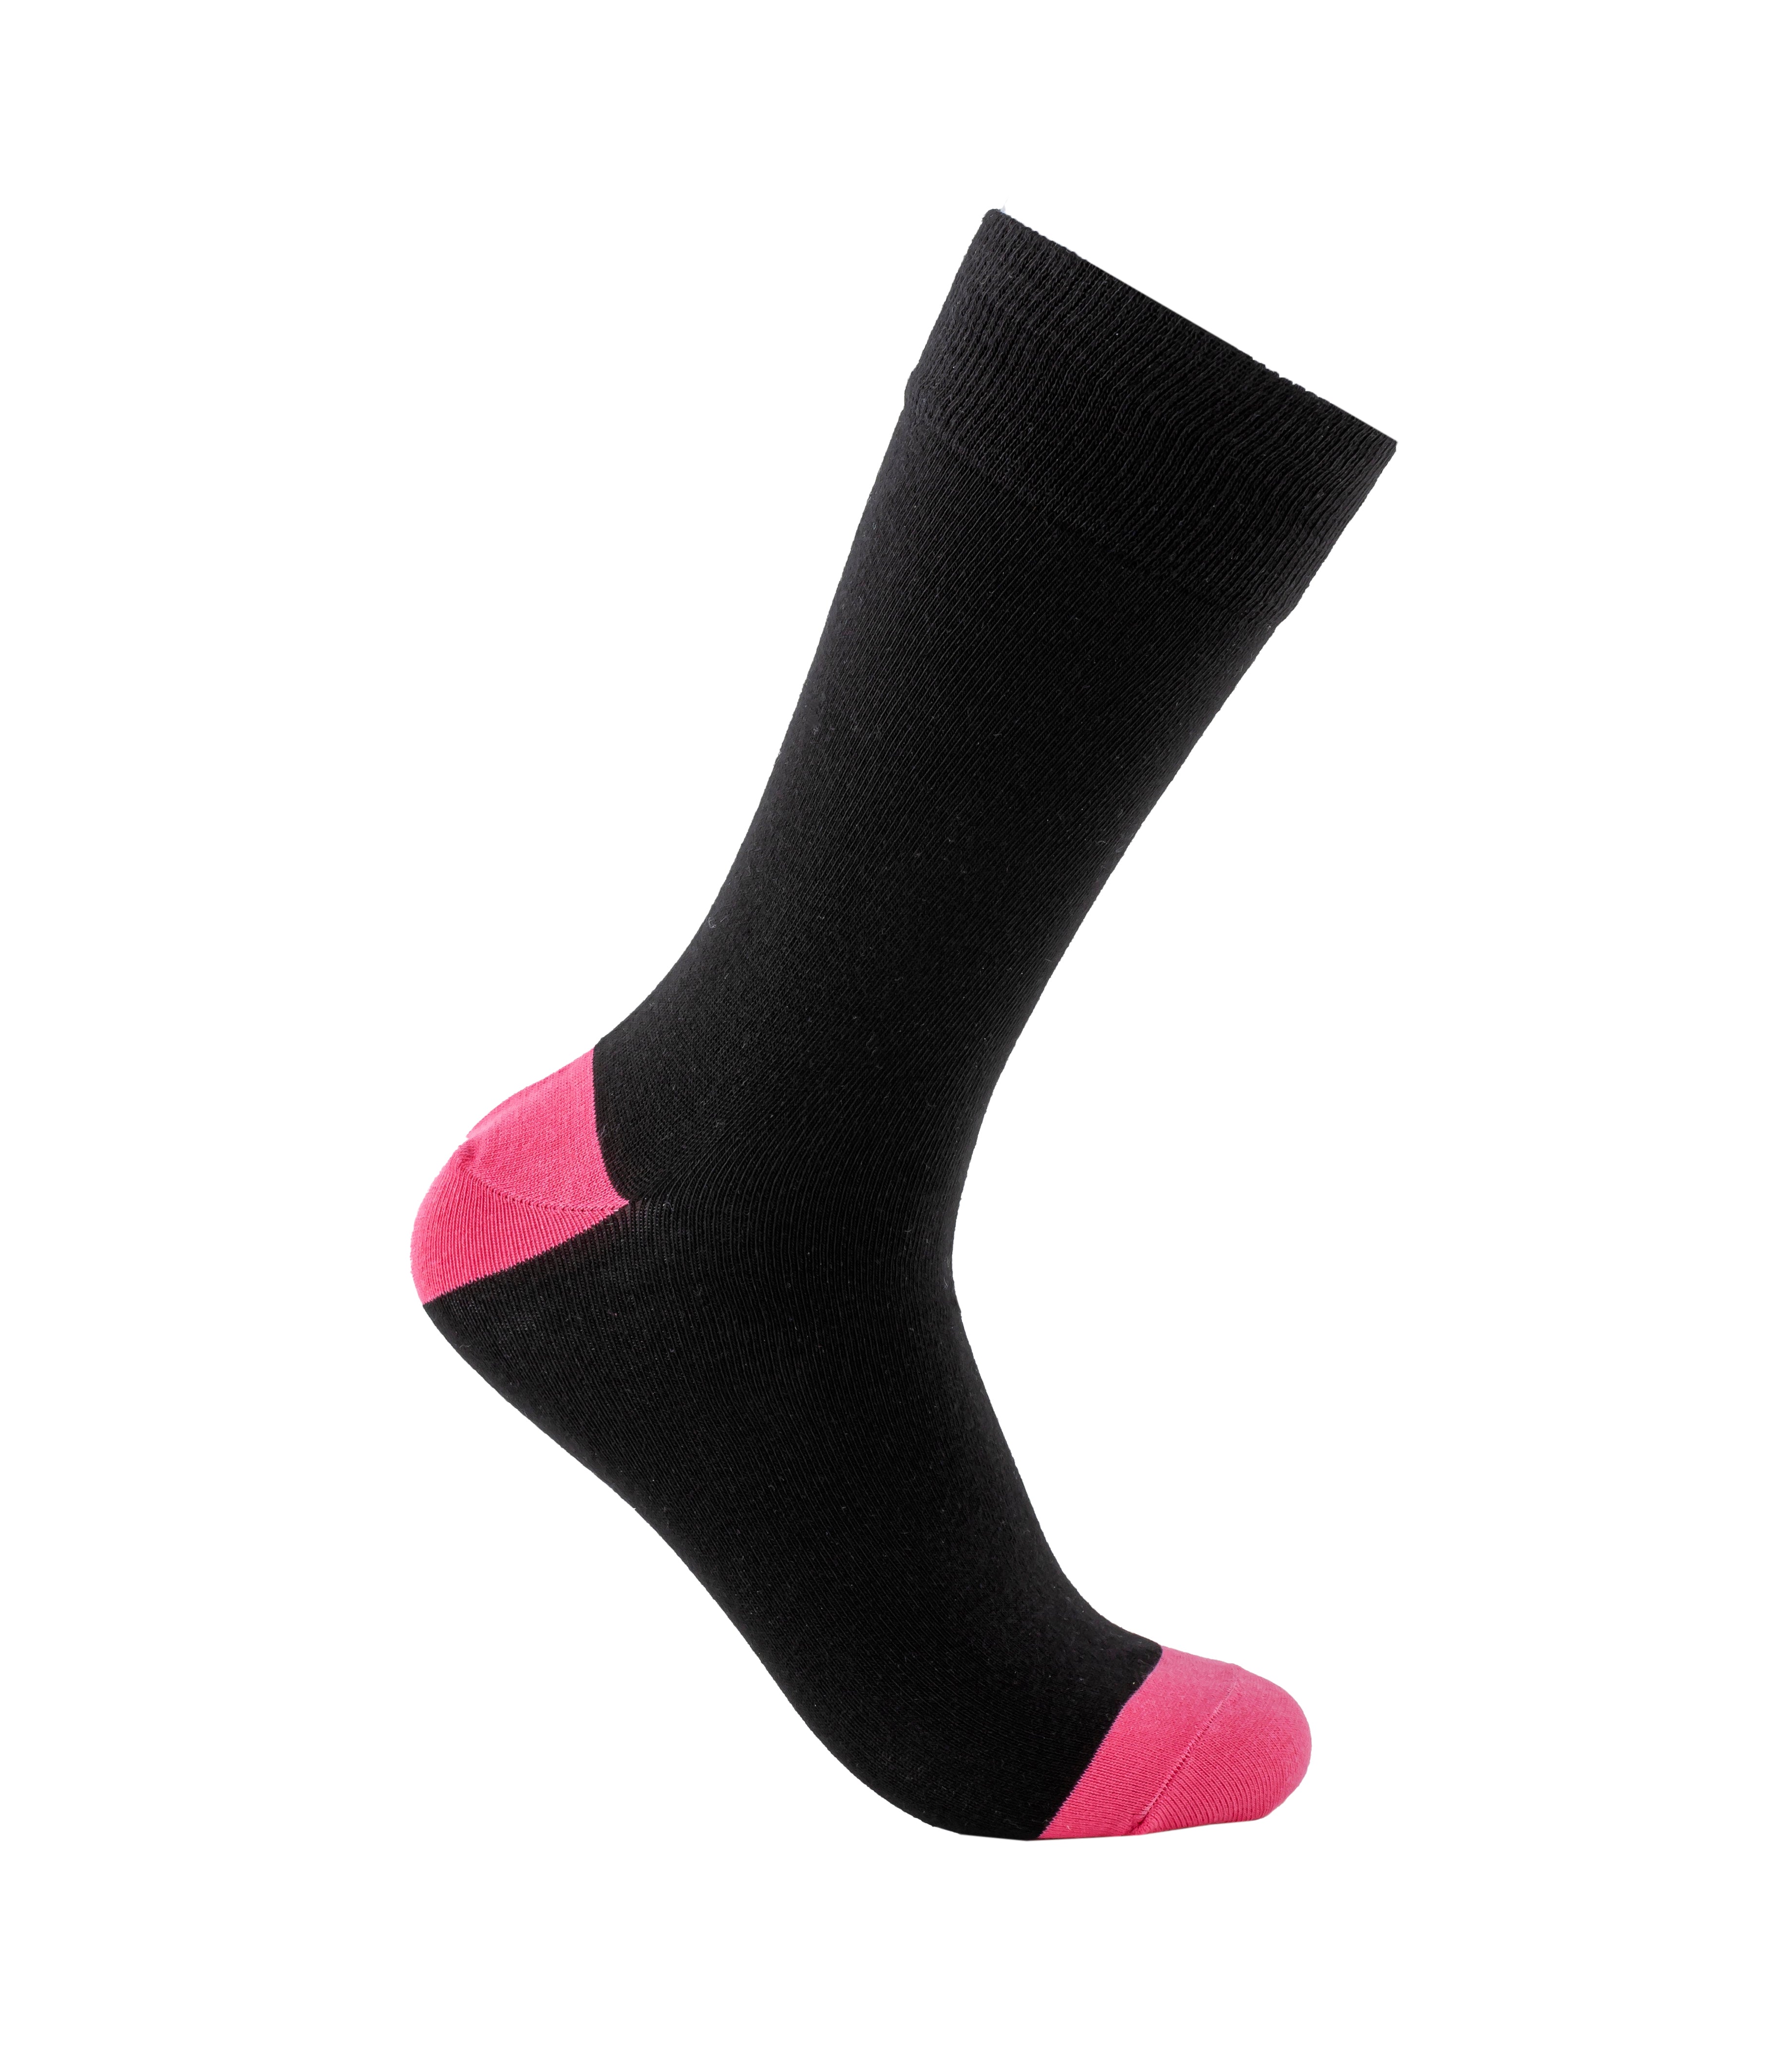 The Ultimate Black Sock